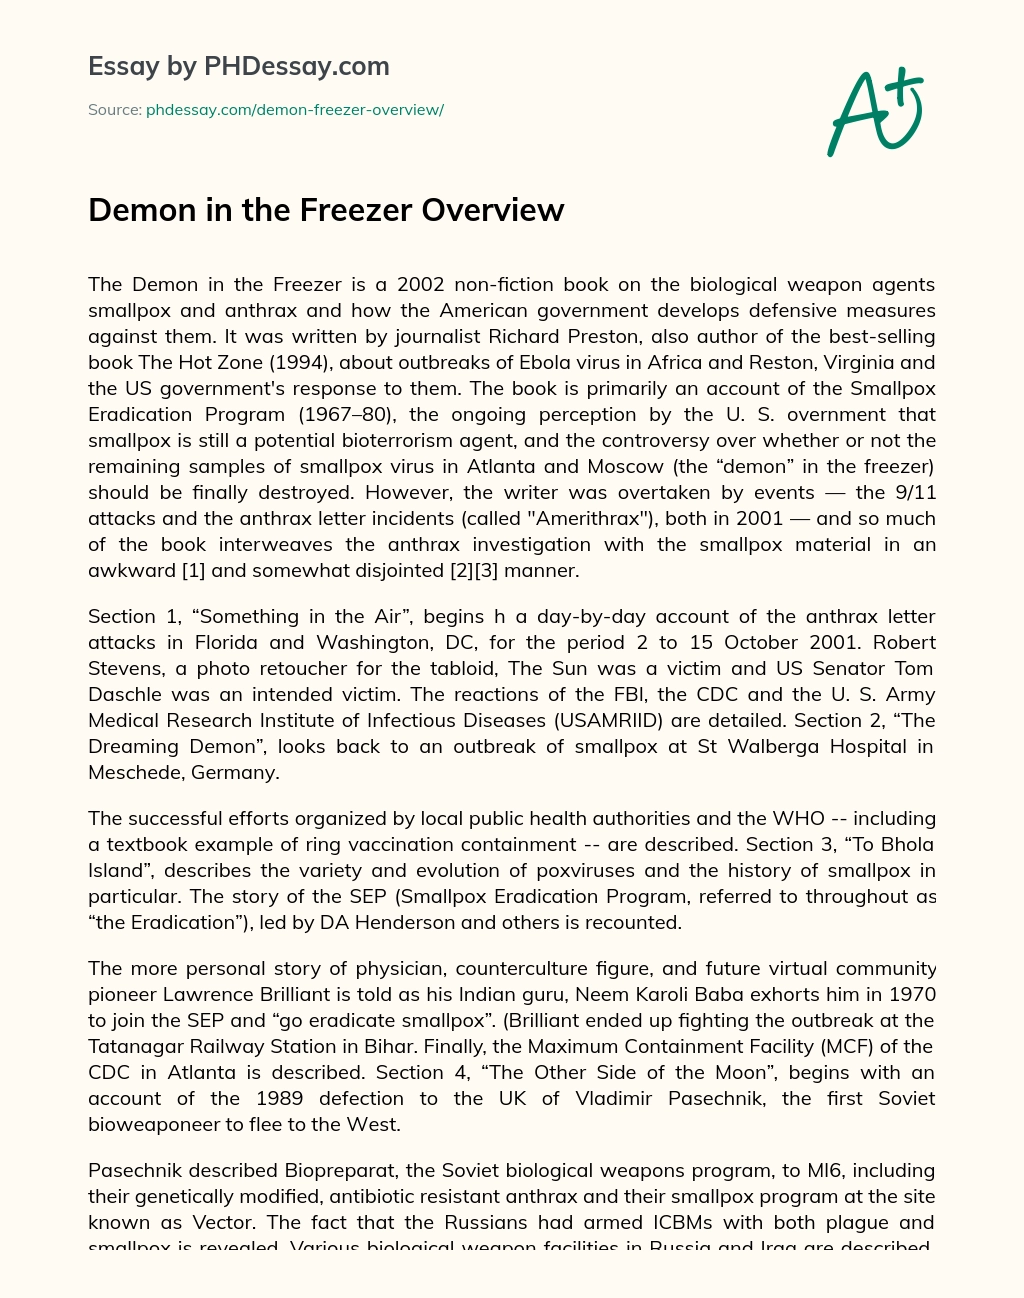 Demon in the Freezer Overview essay